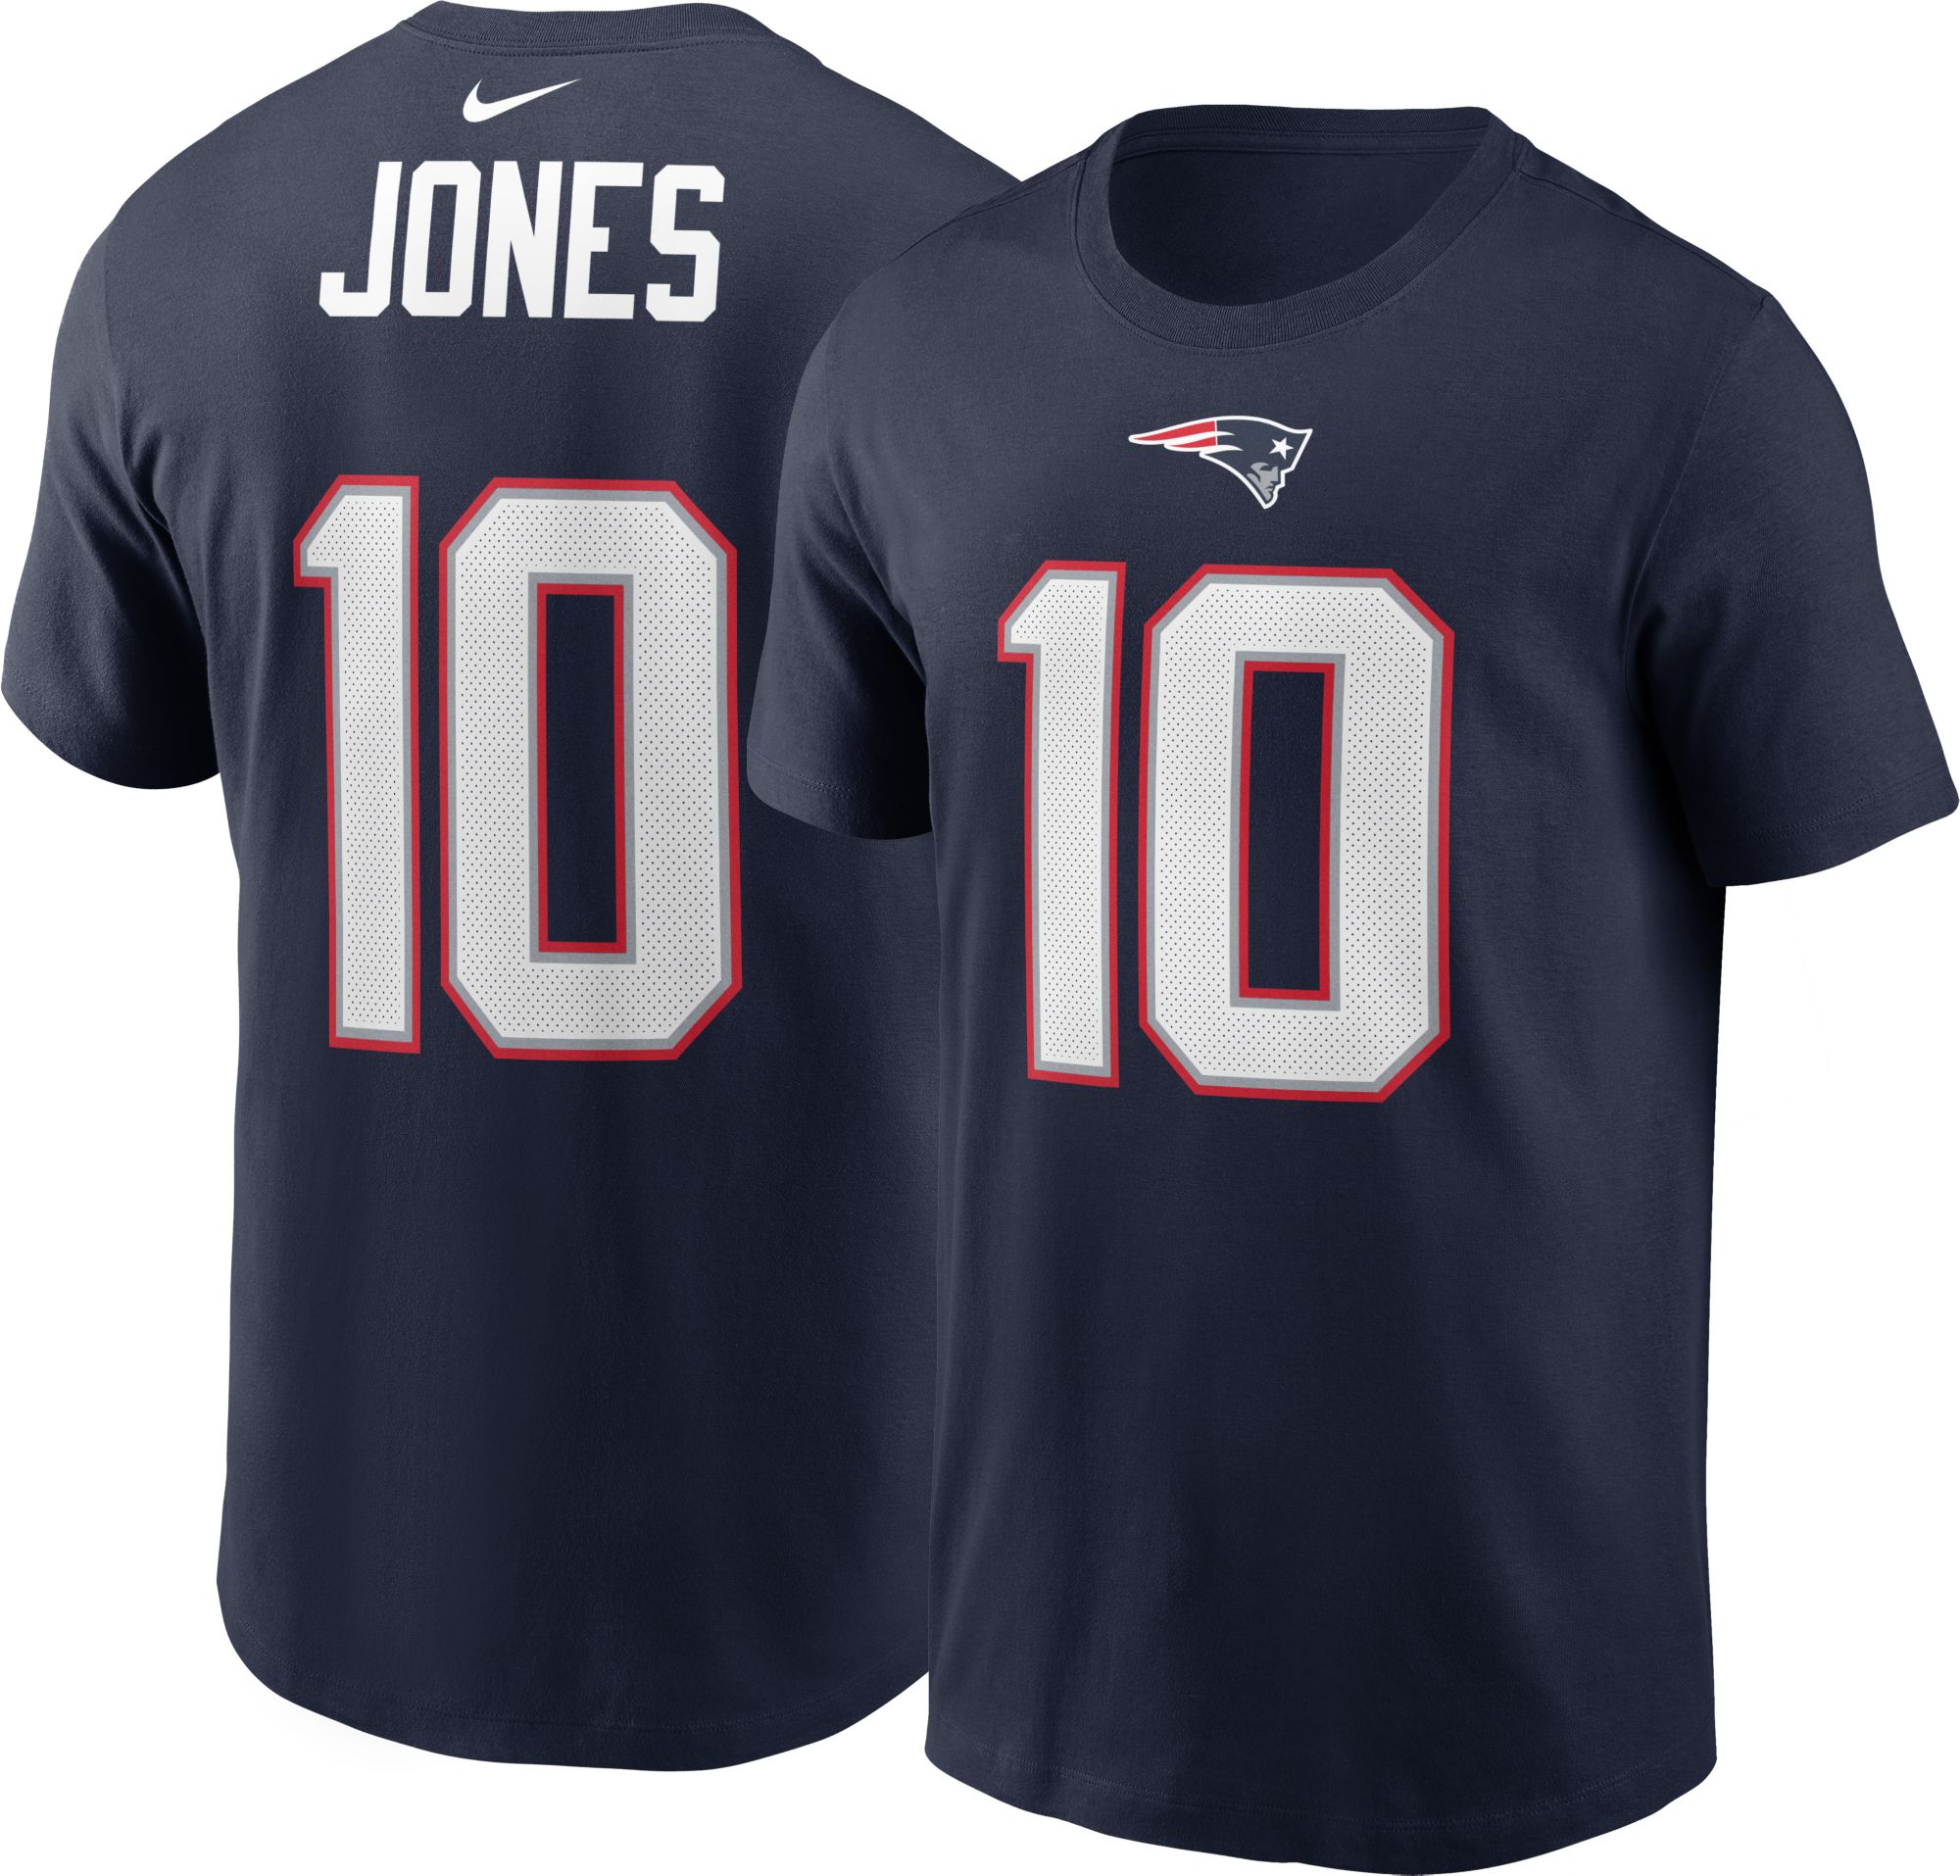 Patriots ProShop on X: Mac Jones #10 Throwback Jerseys! In-store now at  Gillette Stadium #PatriotsProShop  / X